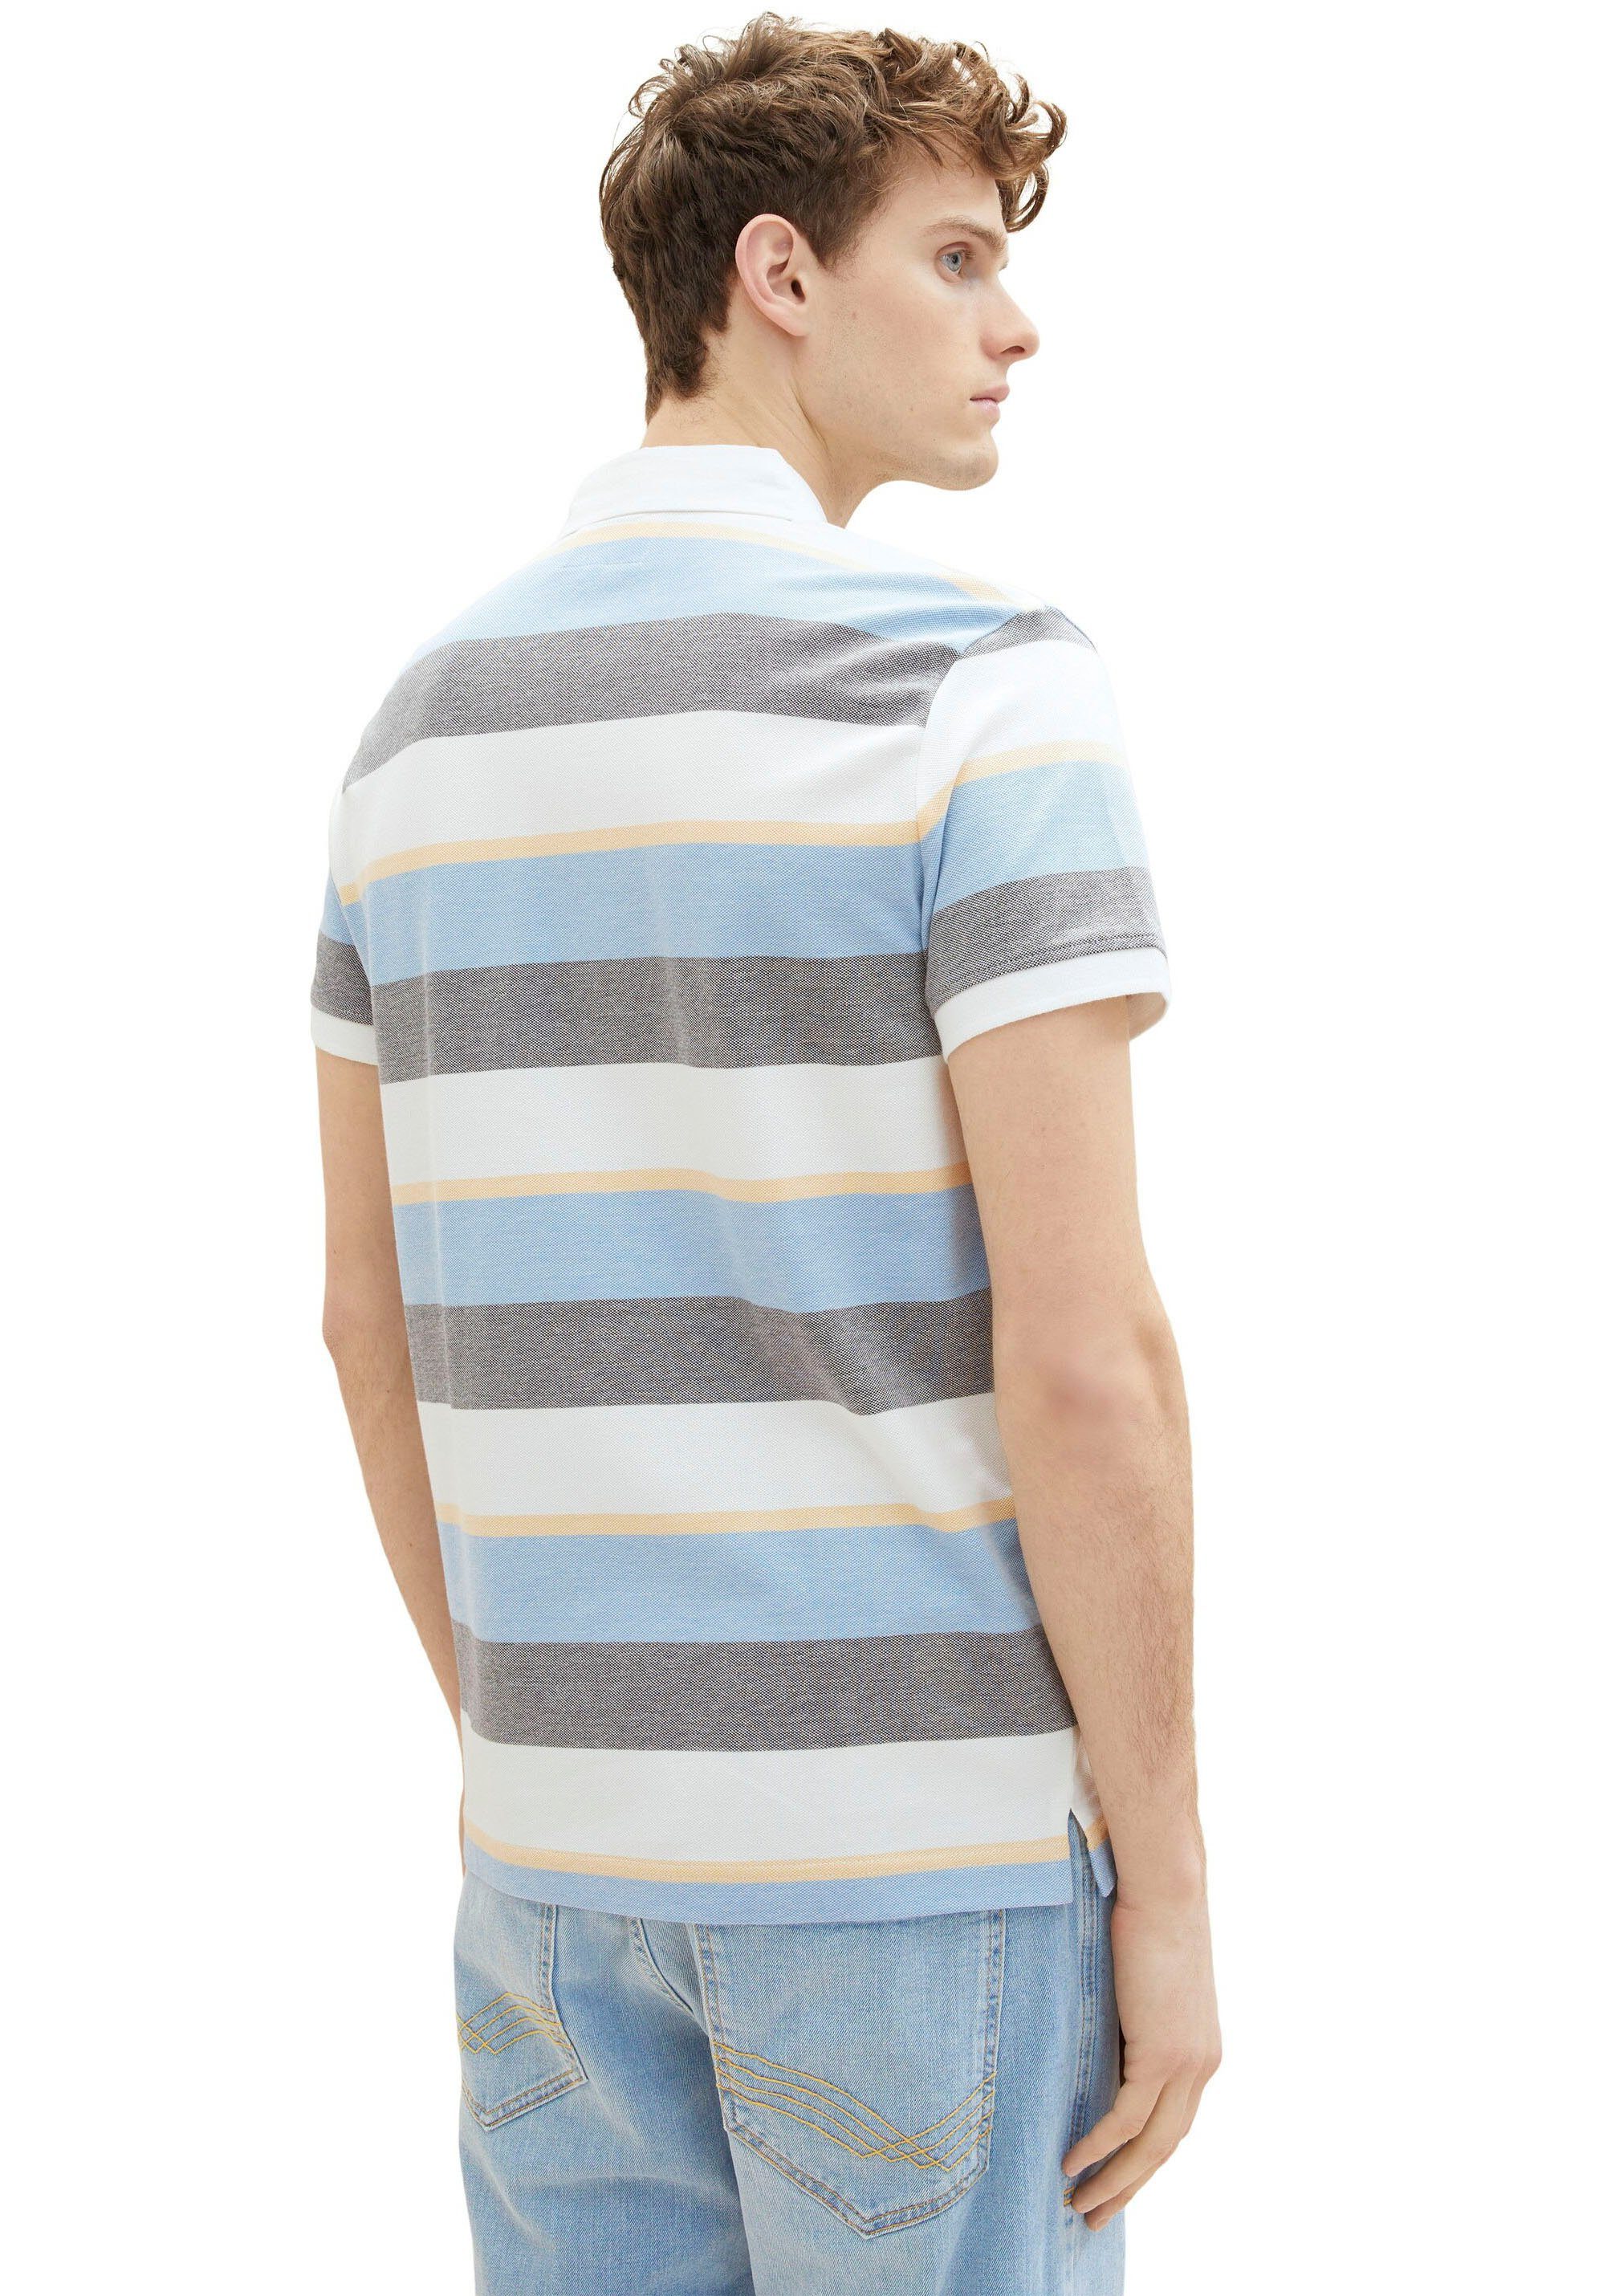 TOM TAILOR T-Shirt stripe multicolor big blue